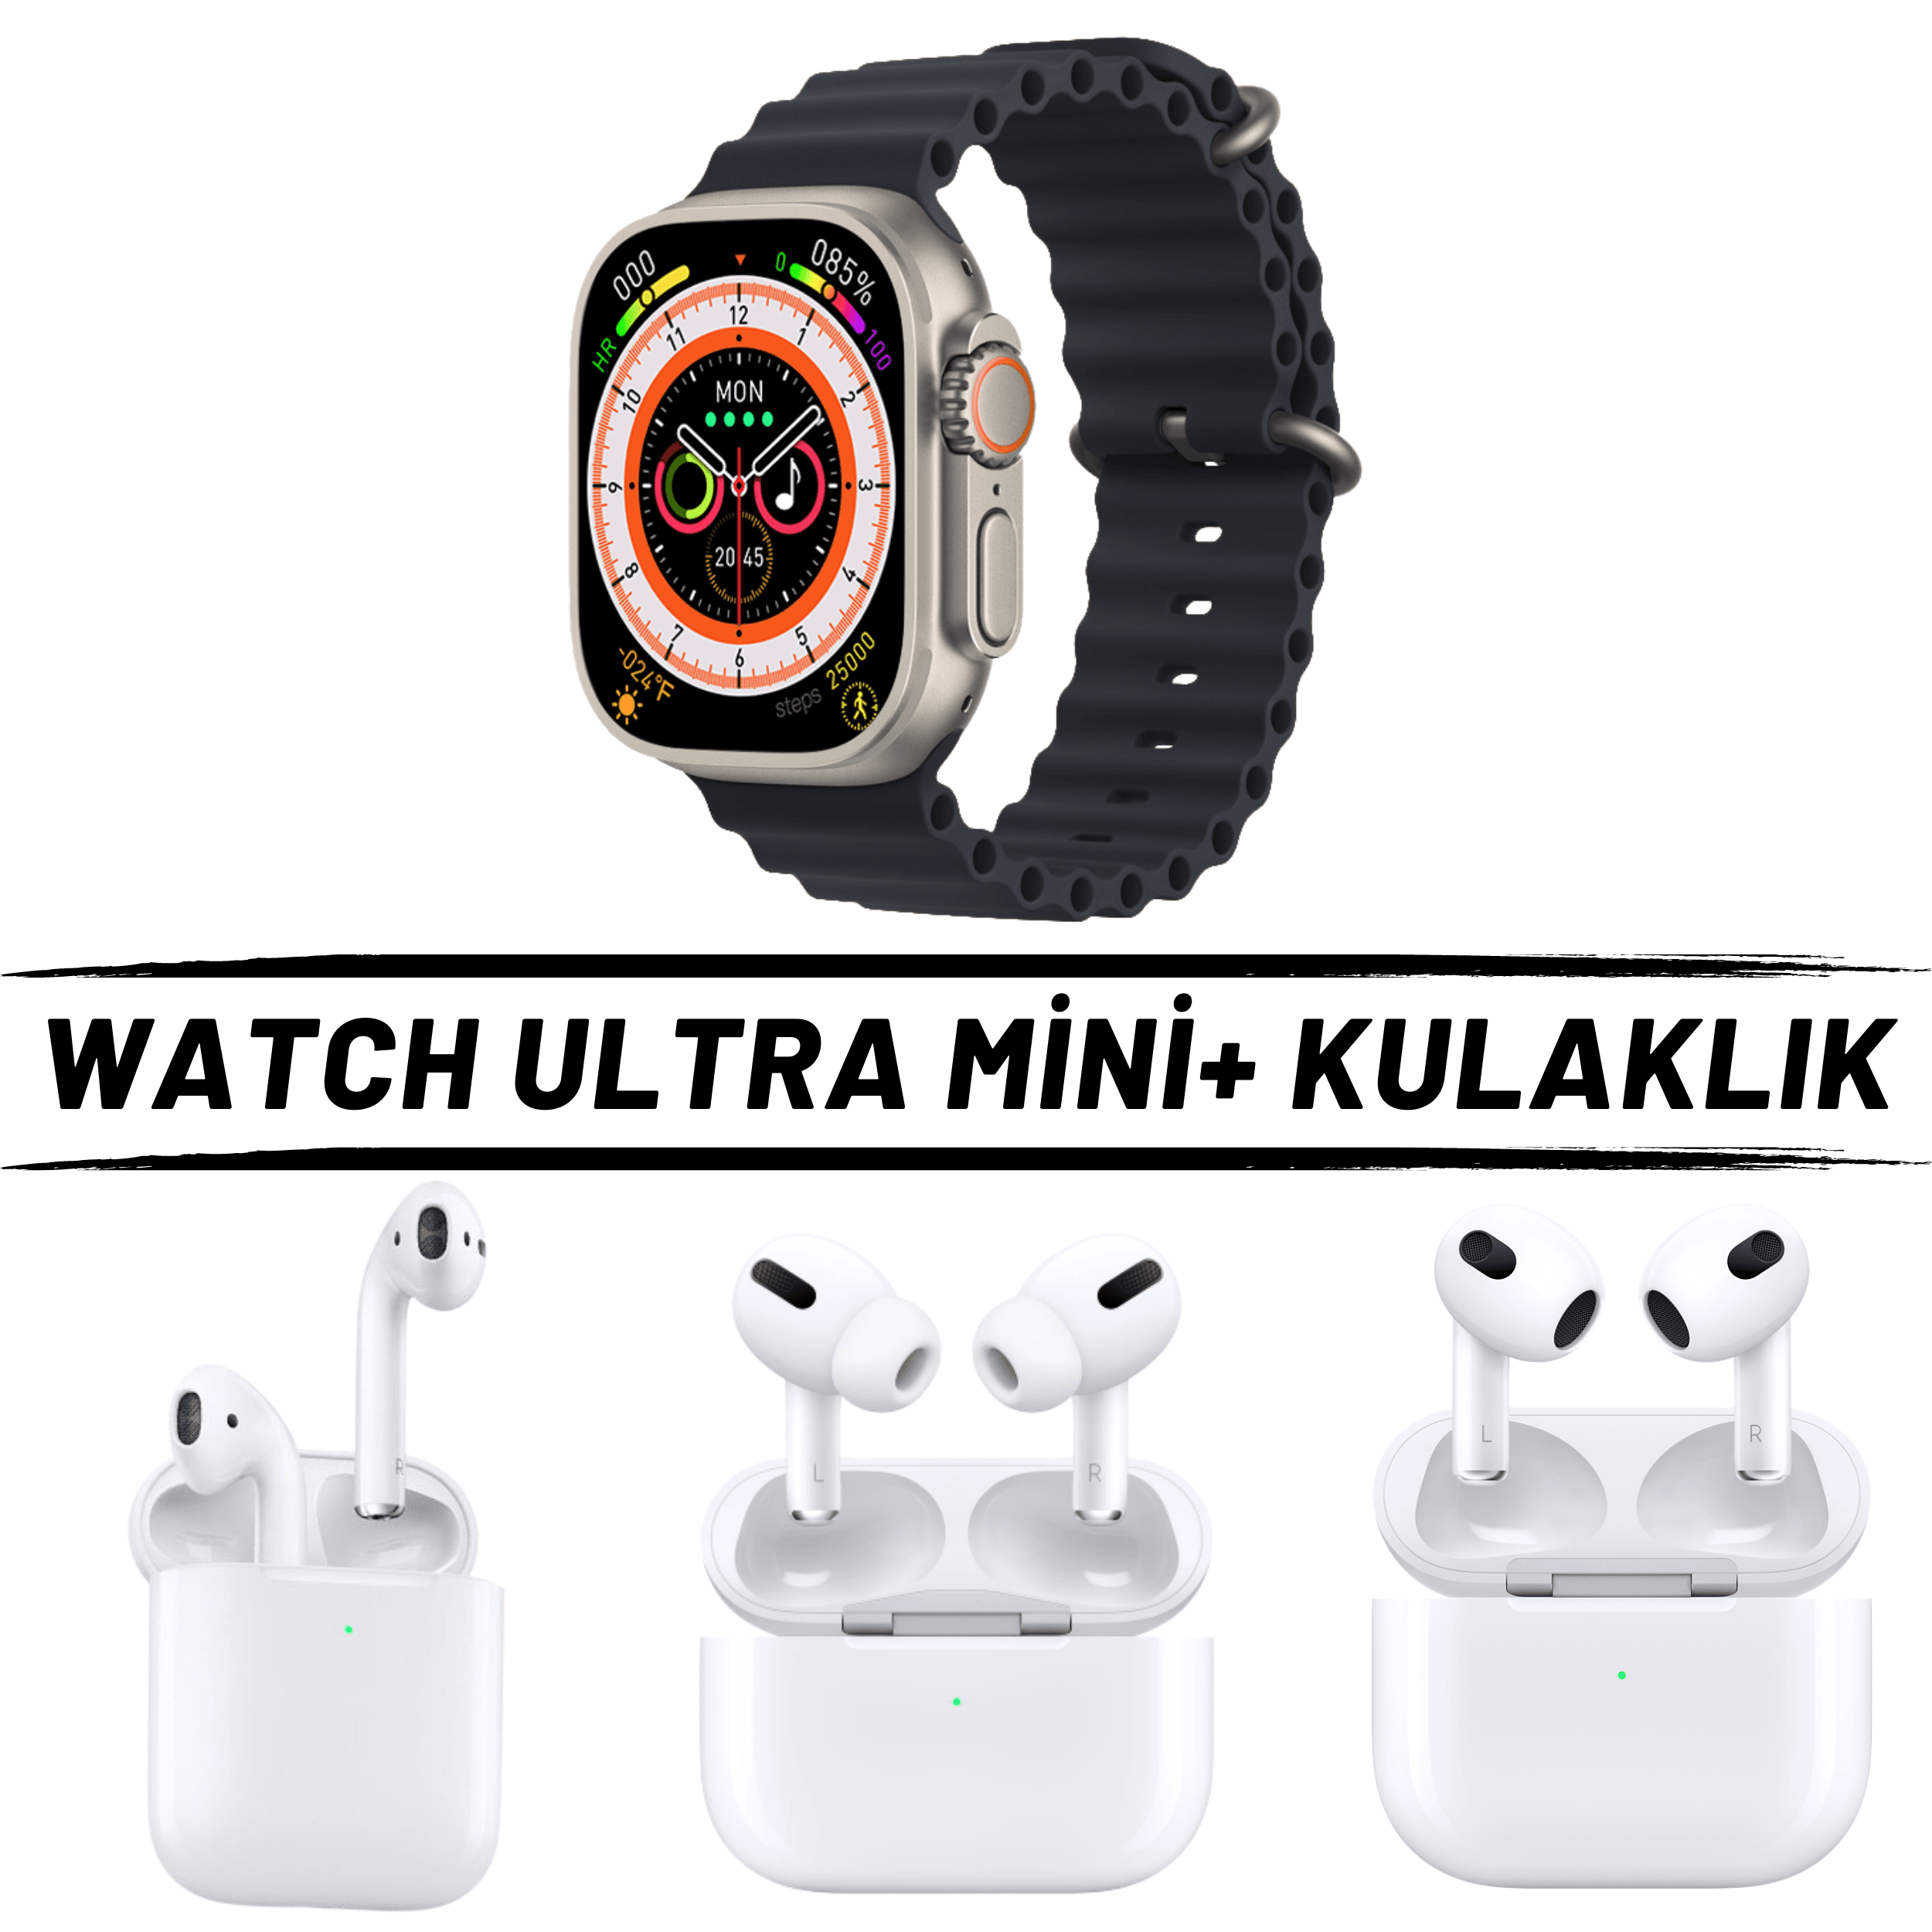 Watch Ultra Mini + Kulaklık